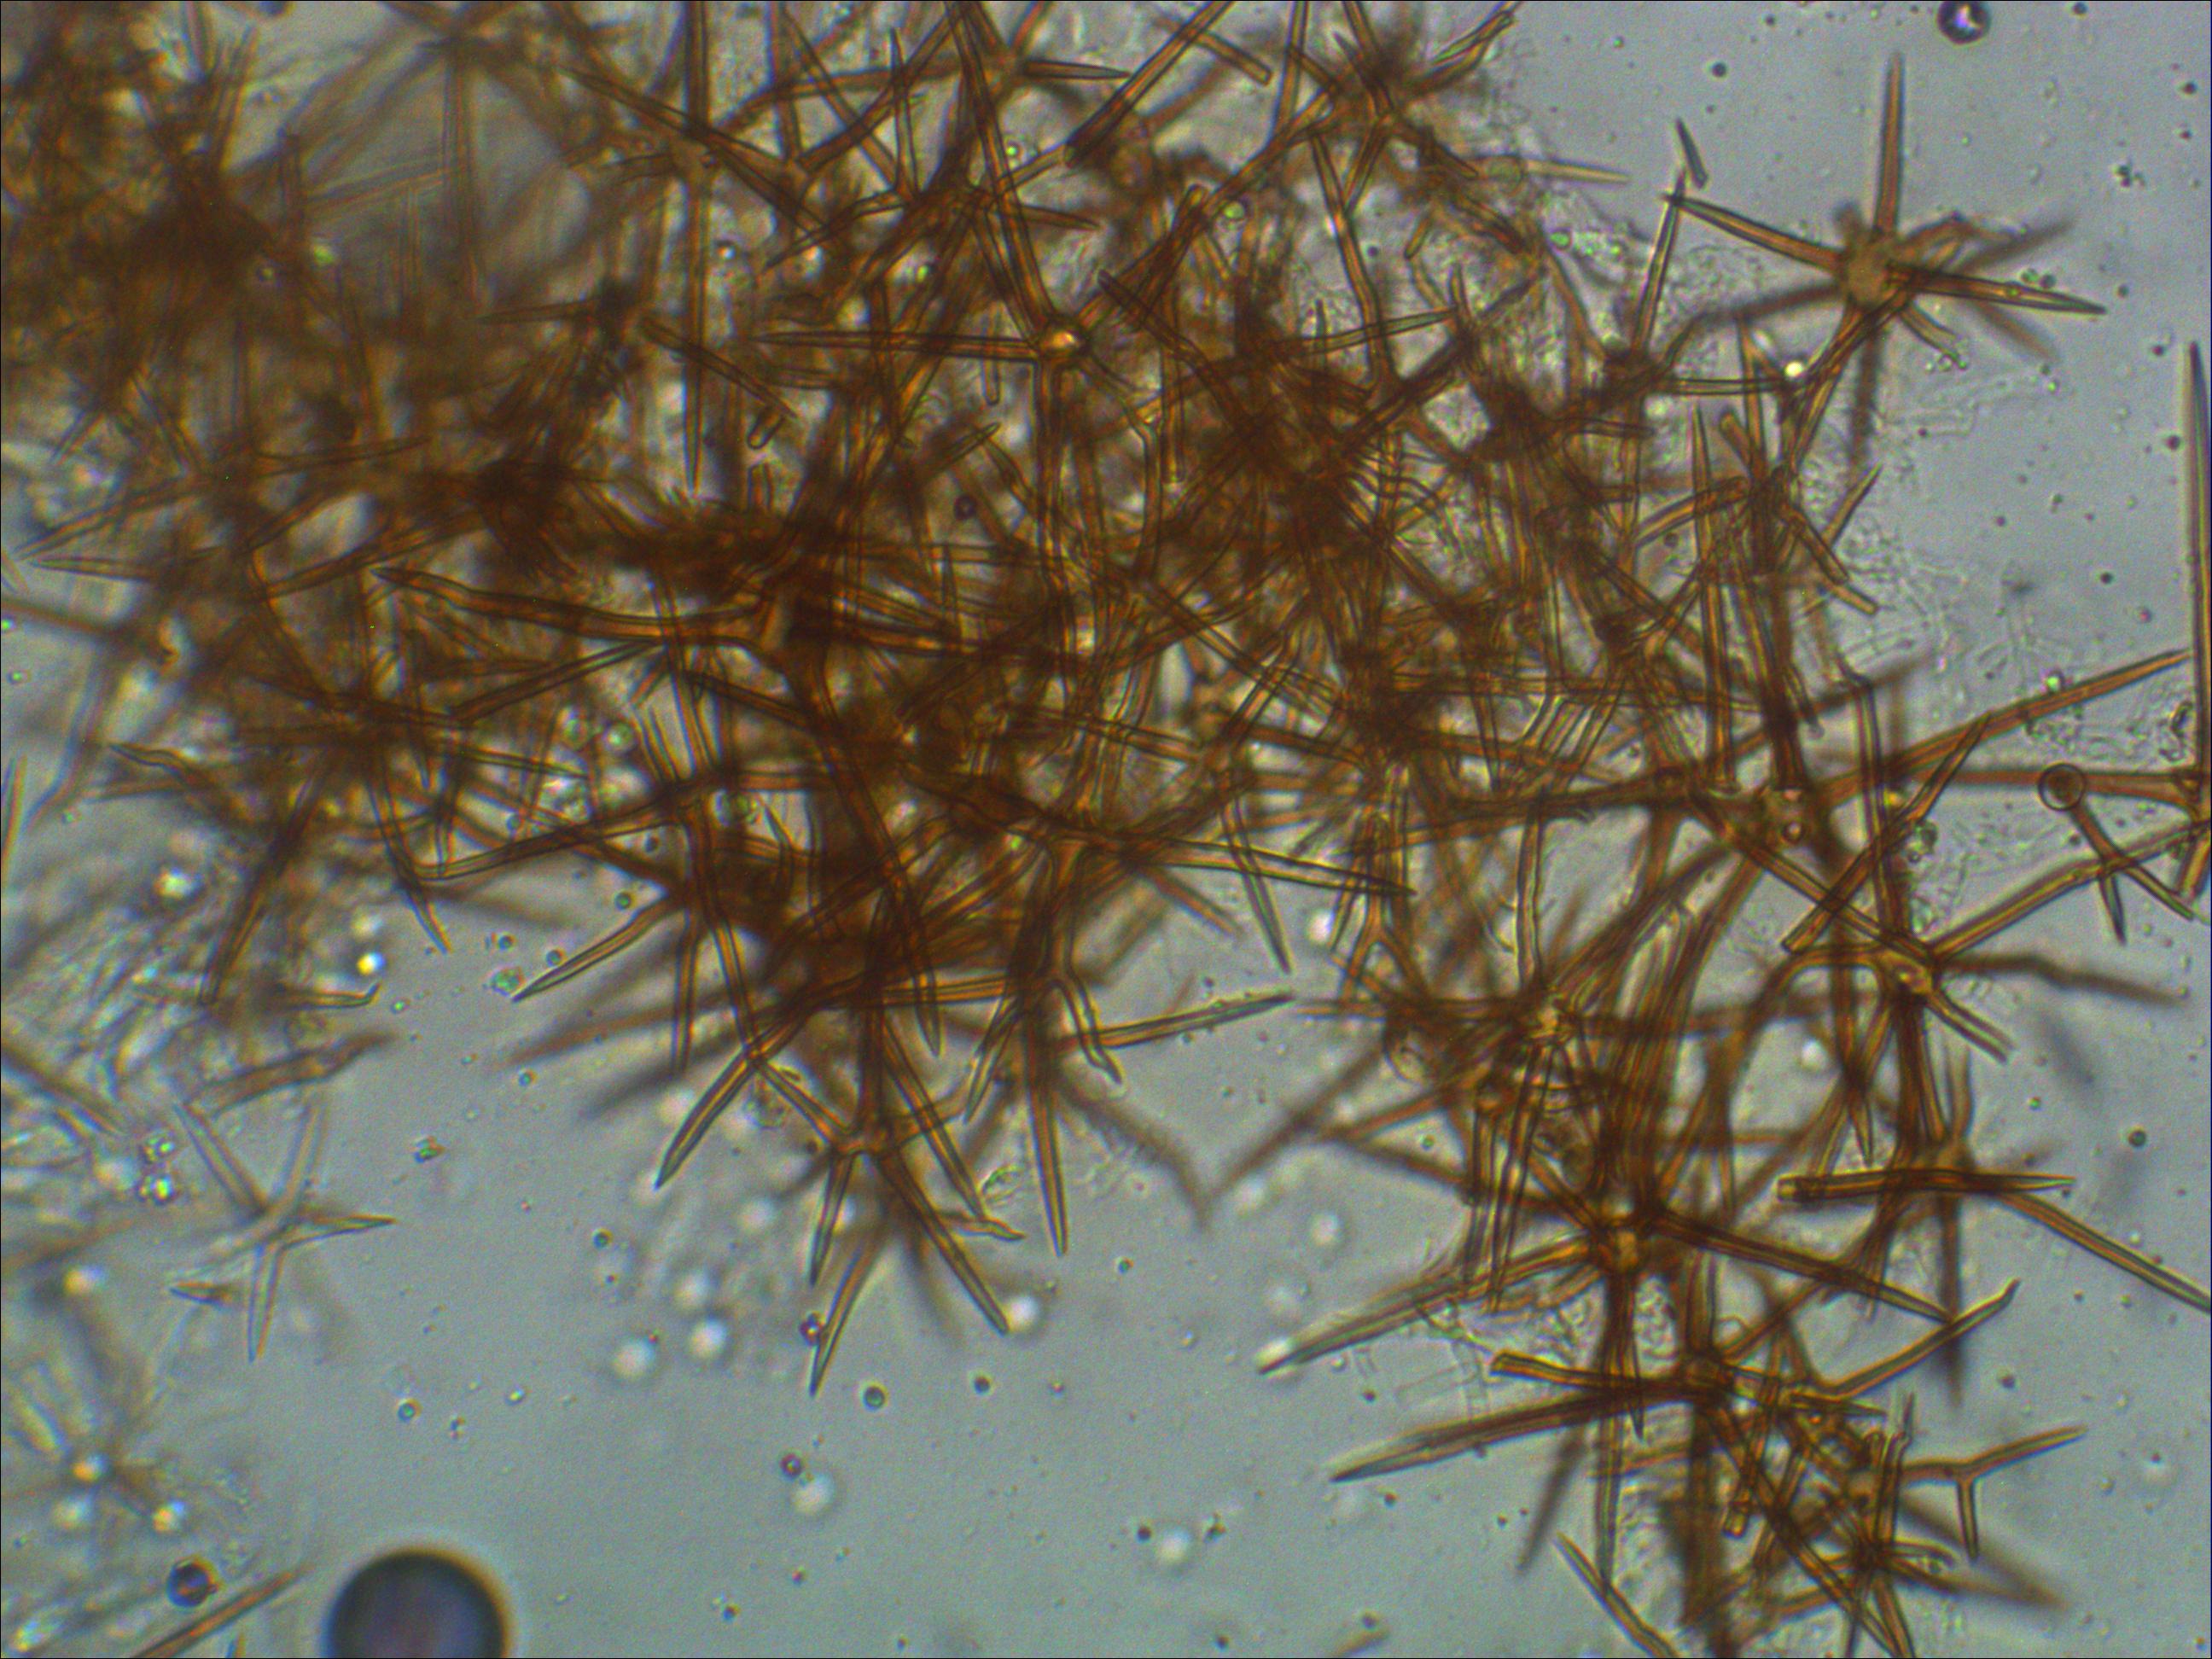 Asterostroma cervicolor Asterosetae Urwald Tschechien Rindenpilz Mikroskopie Pilzschule Schwaebischer Wald